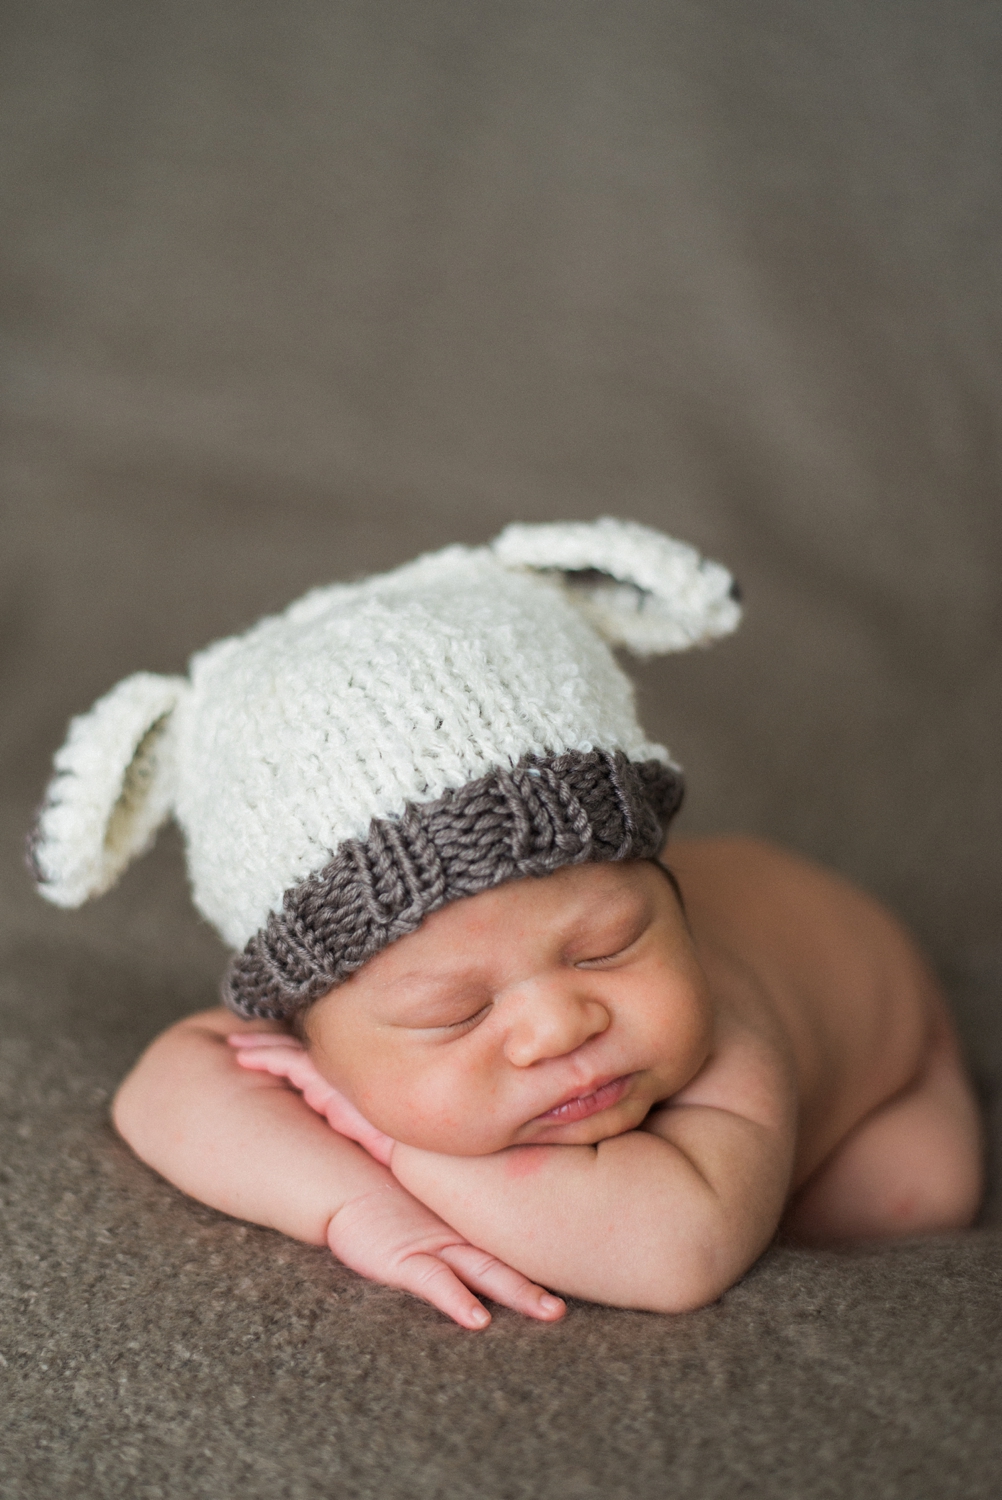 best-newborn-photographer-portland-oregon-sleeping-baby-boy-lamb-knit-hat-shelley-marie-photography-2.jpg